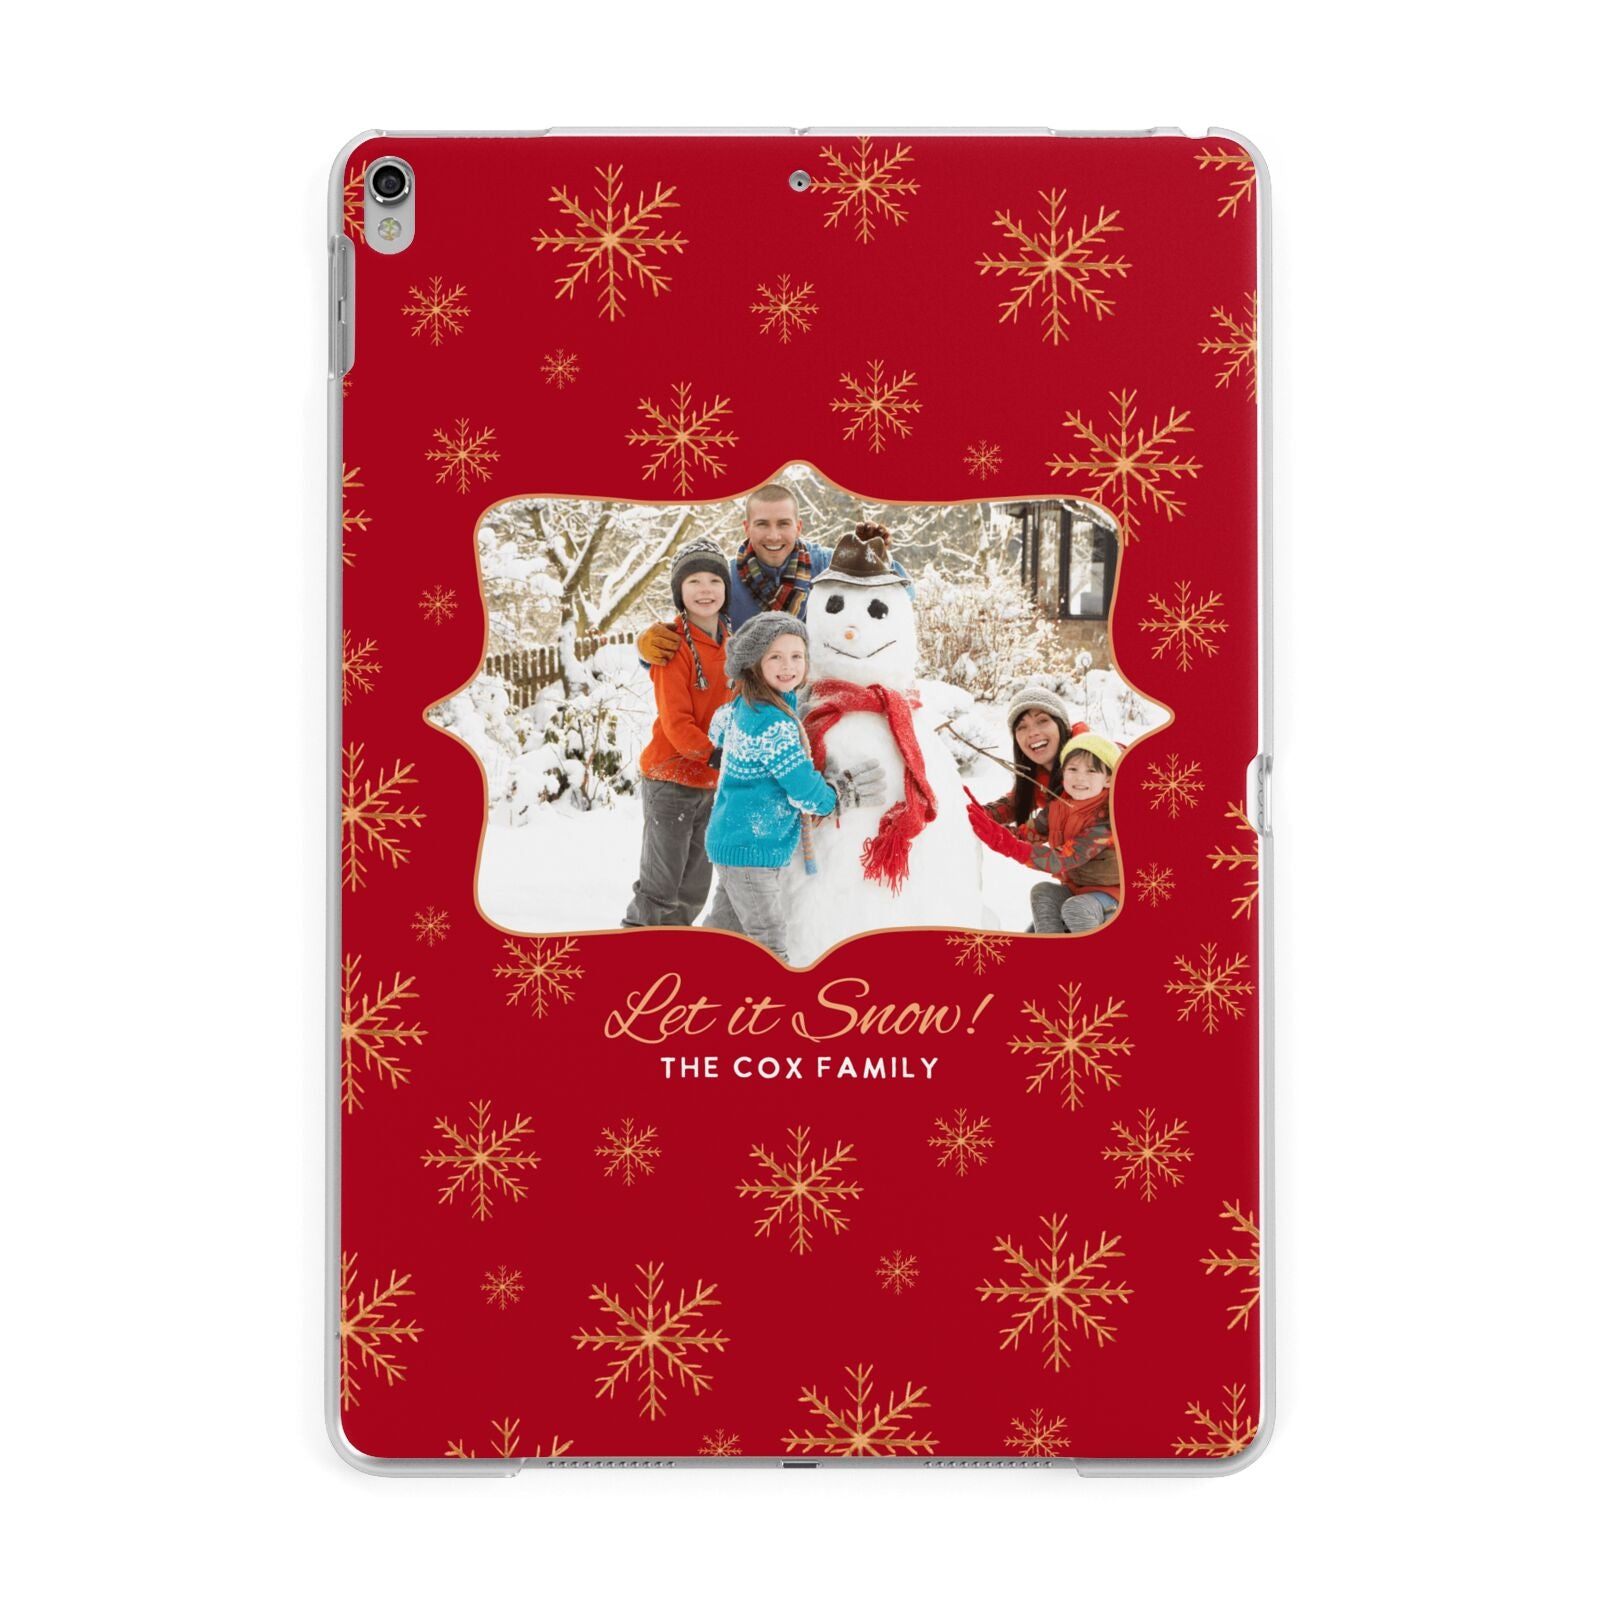 Let it Snow Christmas Photo Upload Apple iPad Silver Case